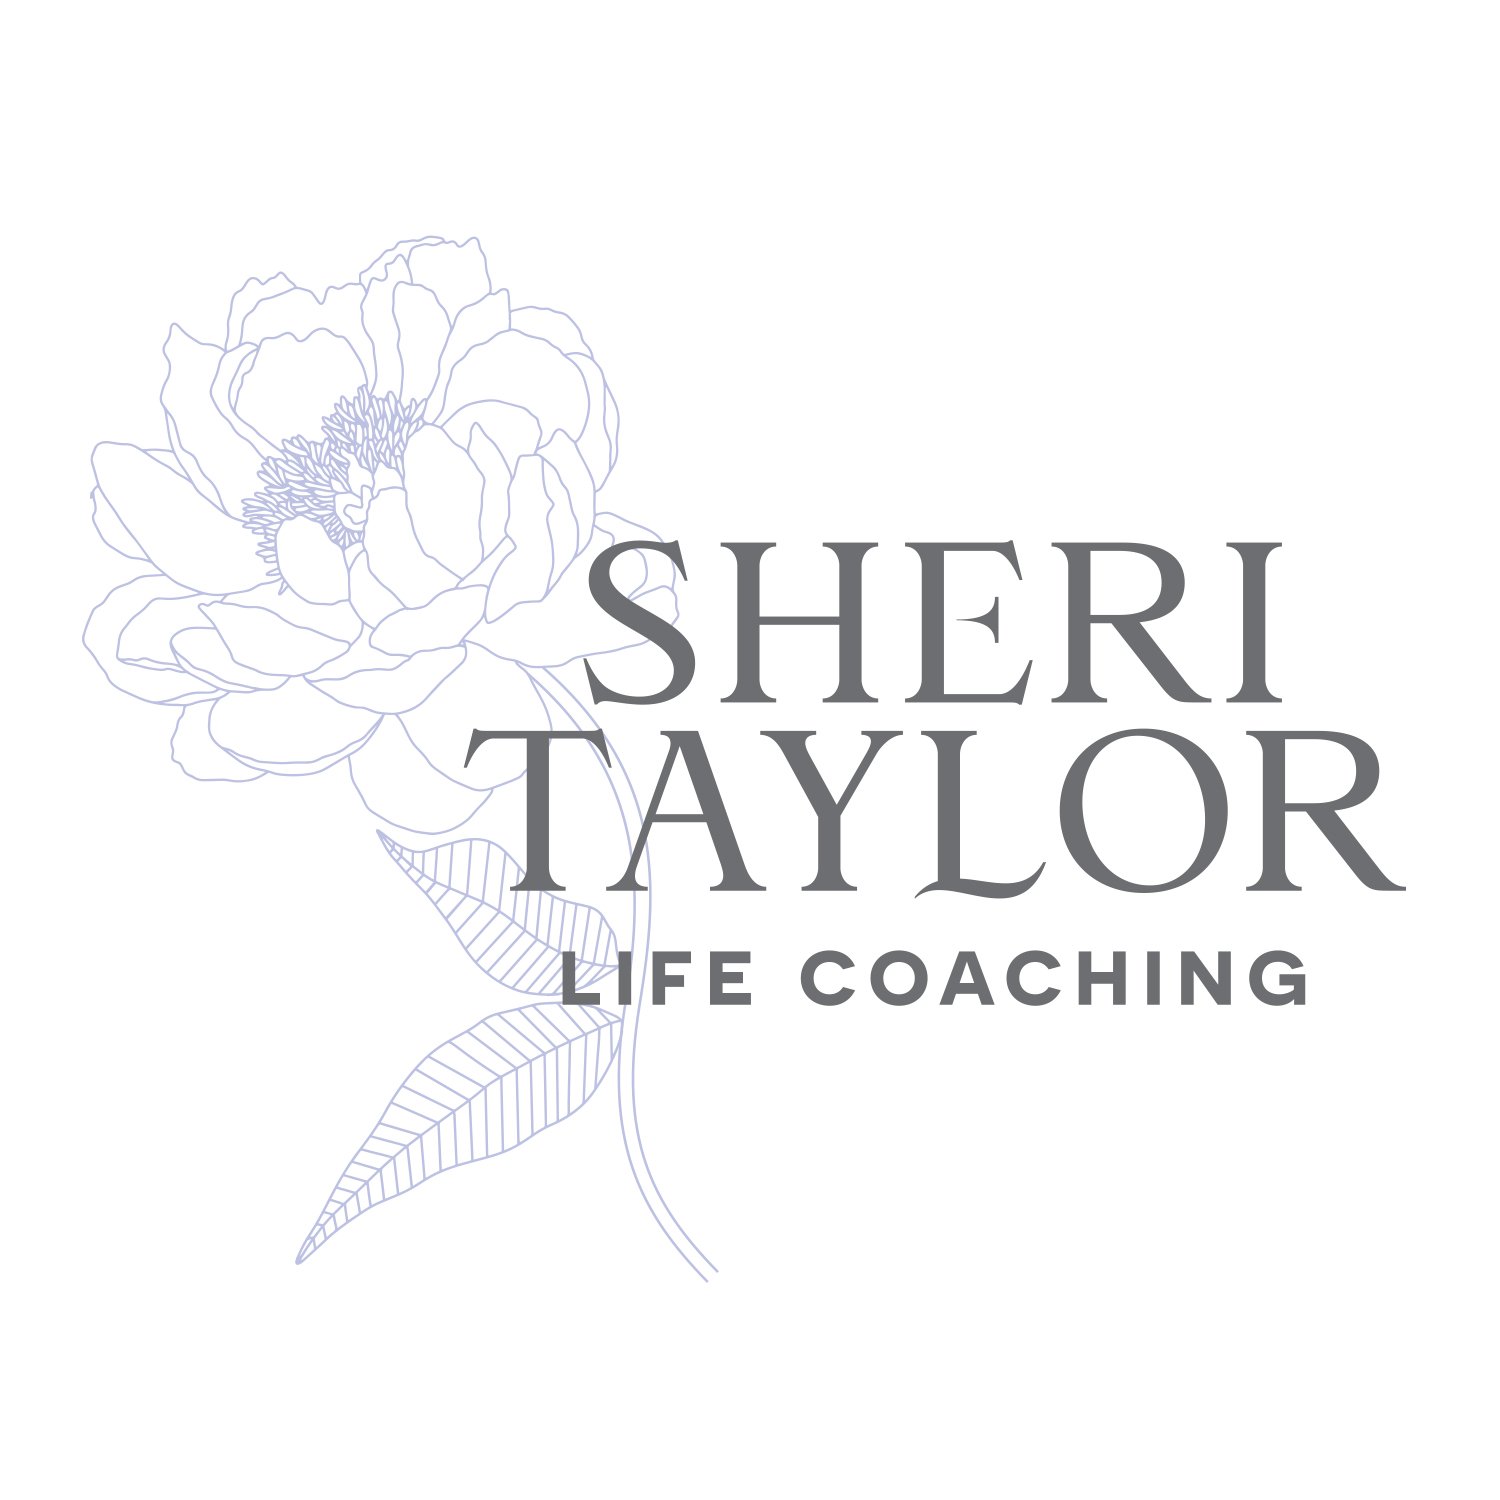 Sheri Taylor Life Coaching, LLC